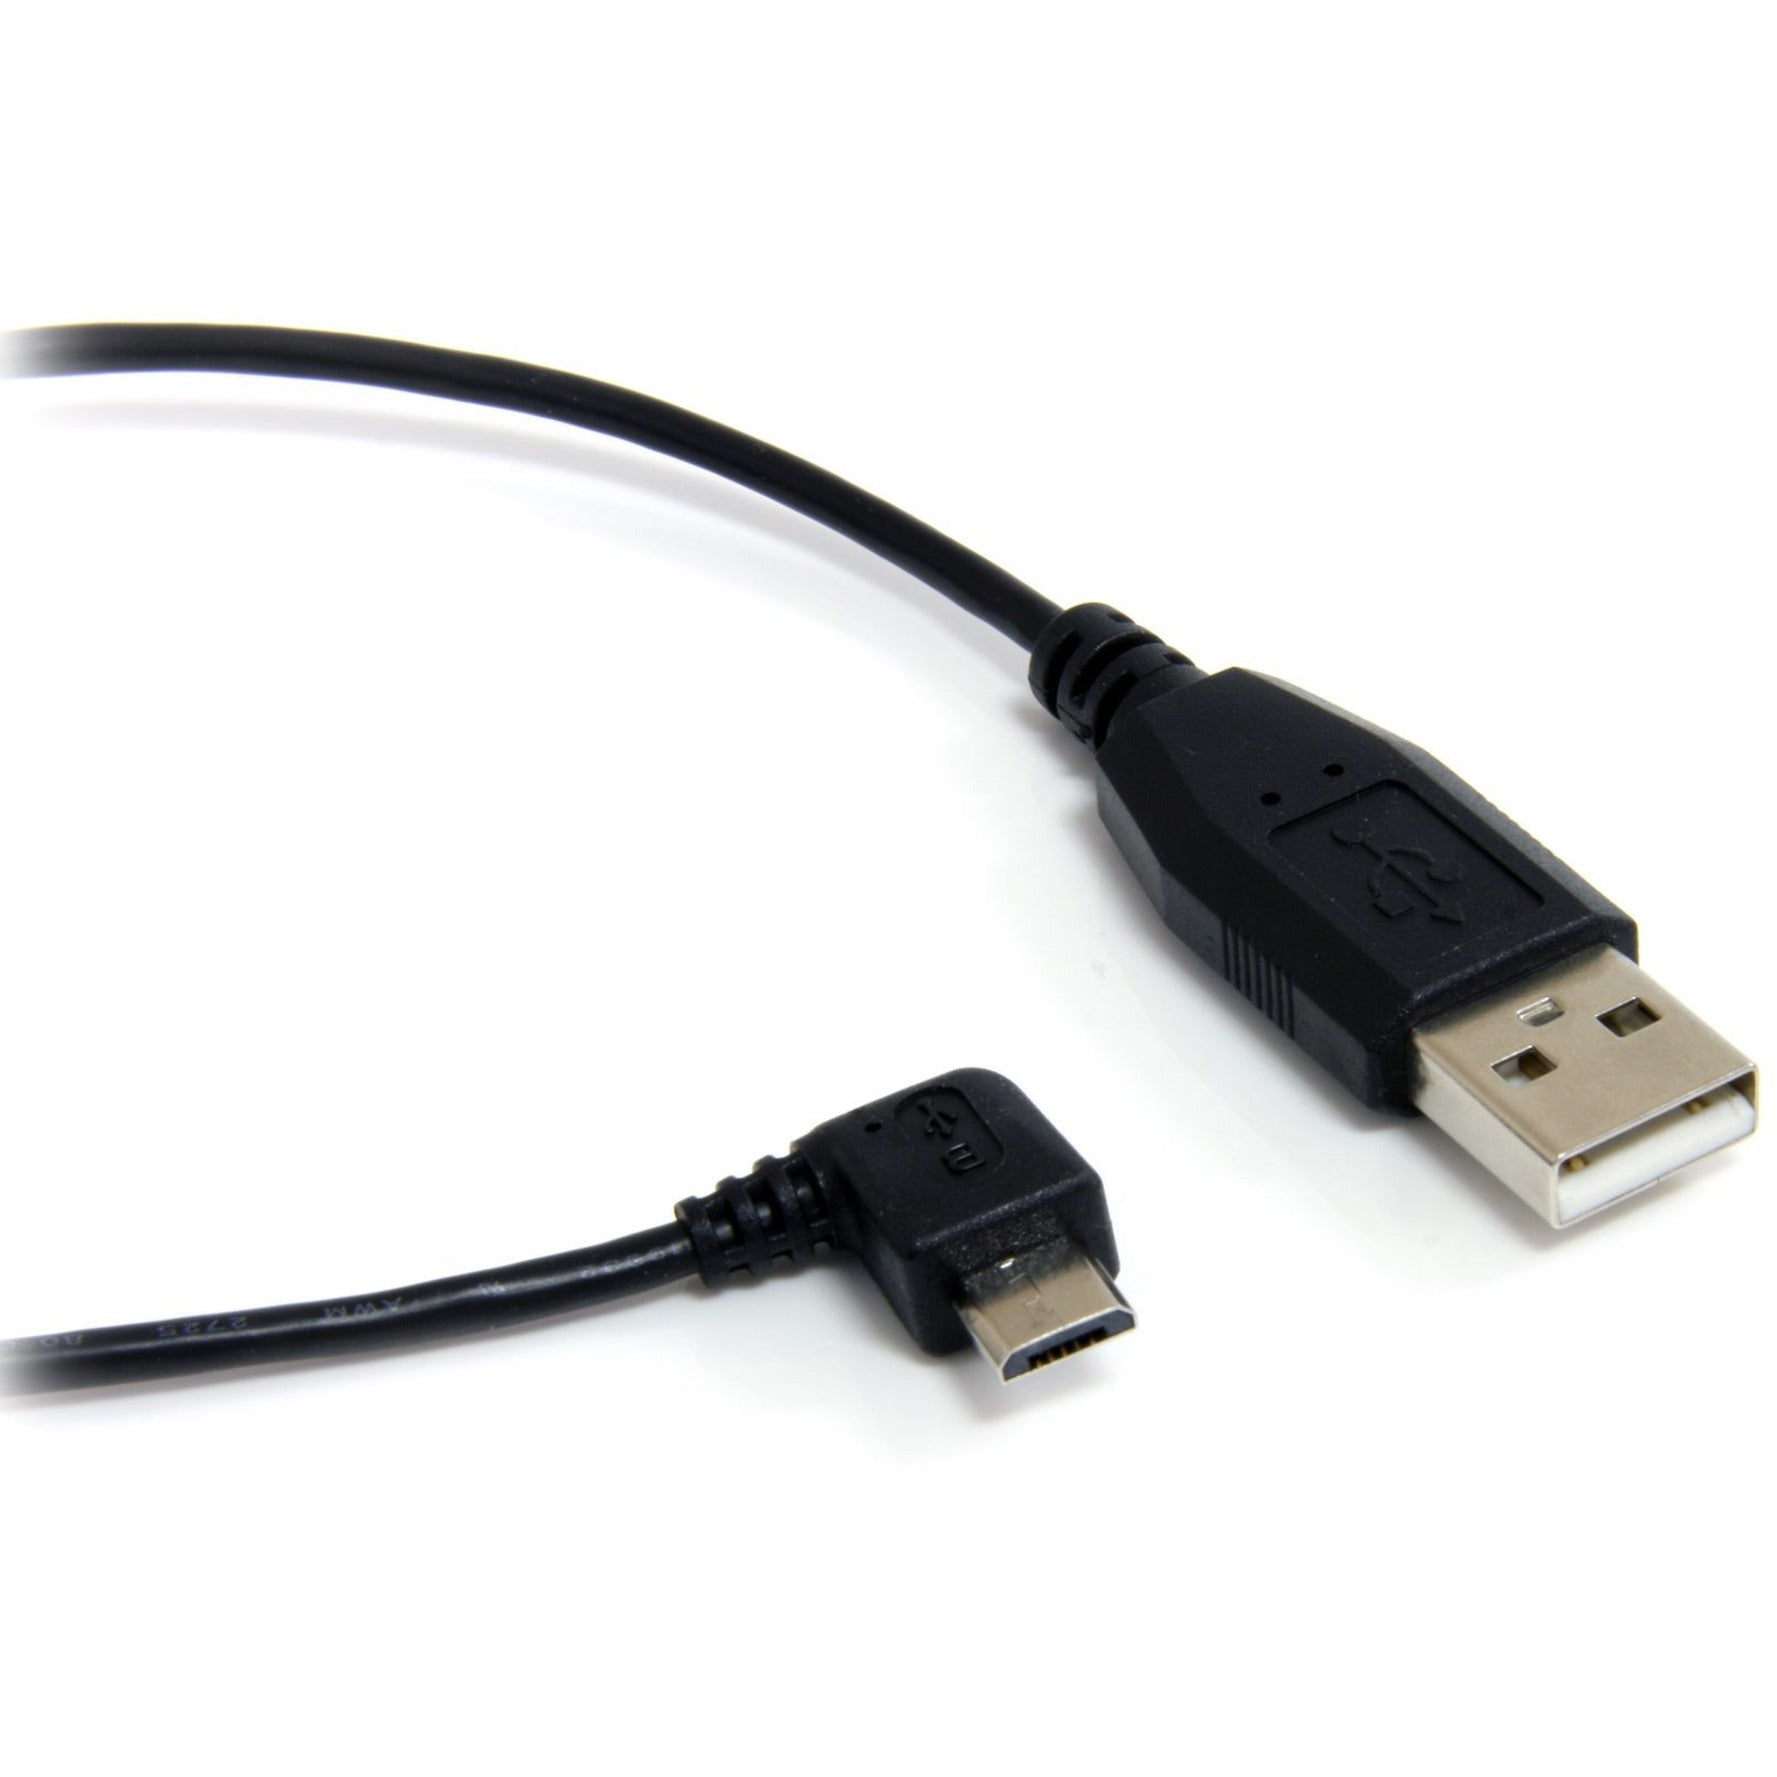 StarTech.com كبل USBHAUB3RA 3 ft مايكرو USB - من A إلى زاوية حق مايكرو B ، شحن ونقل البيانات ، أسود